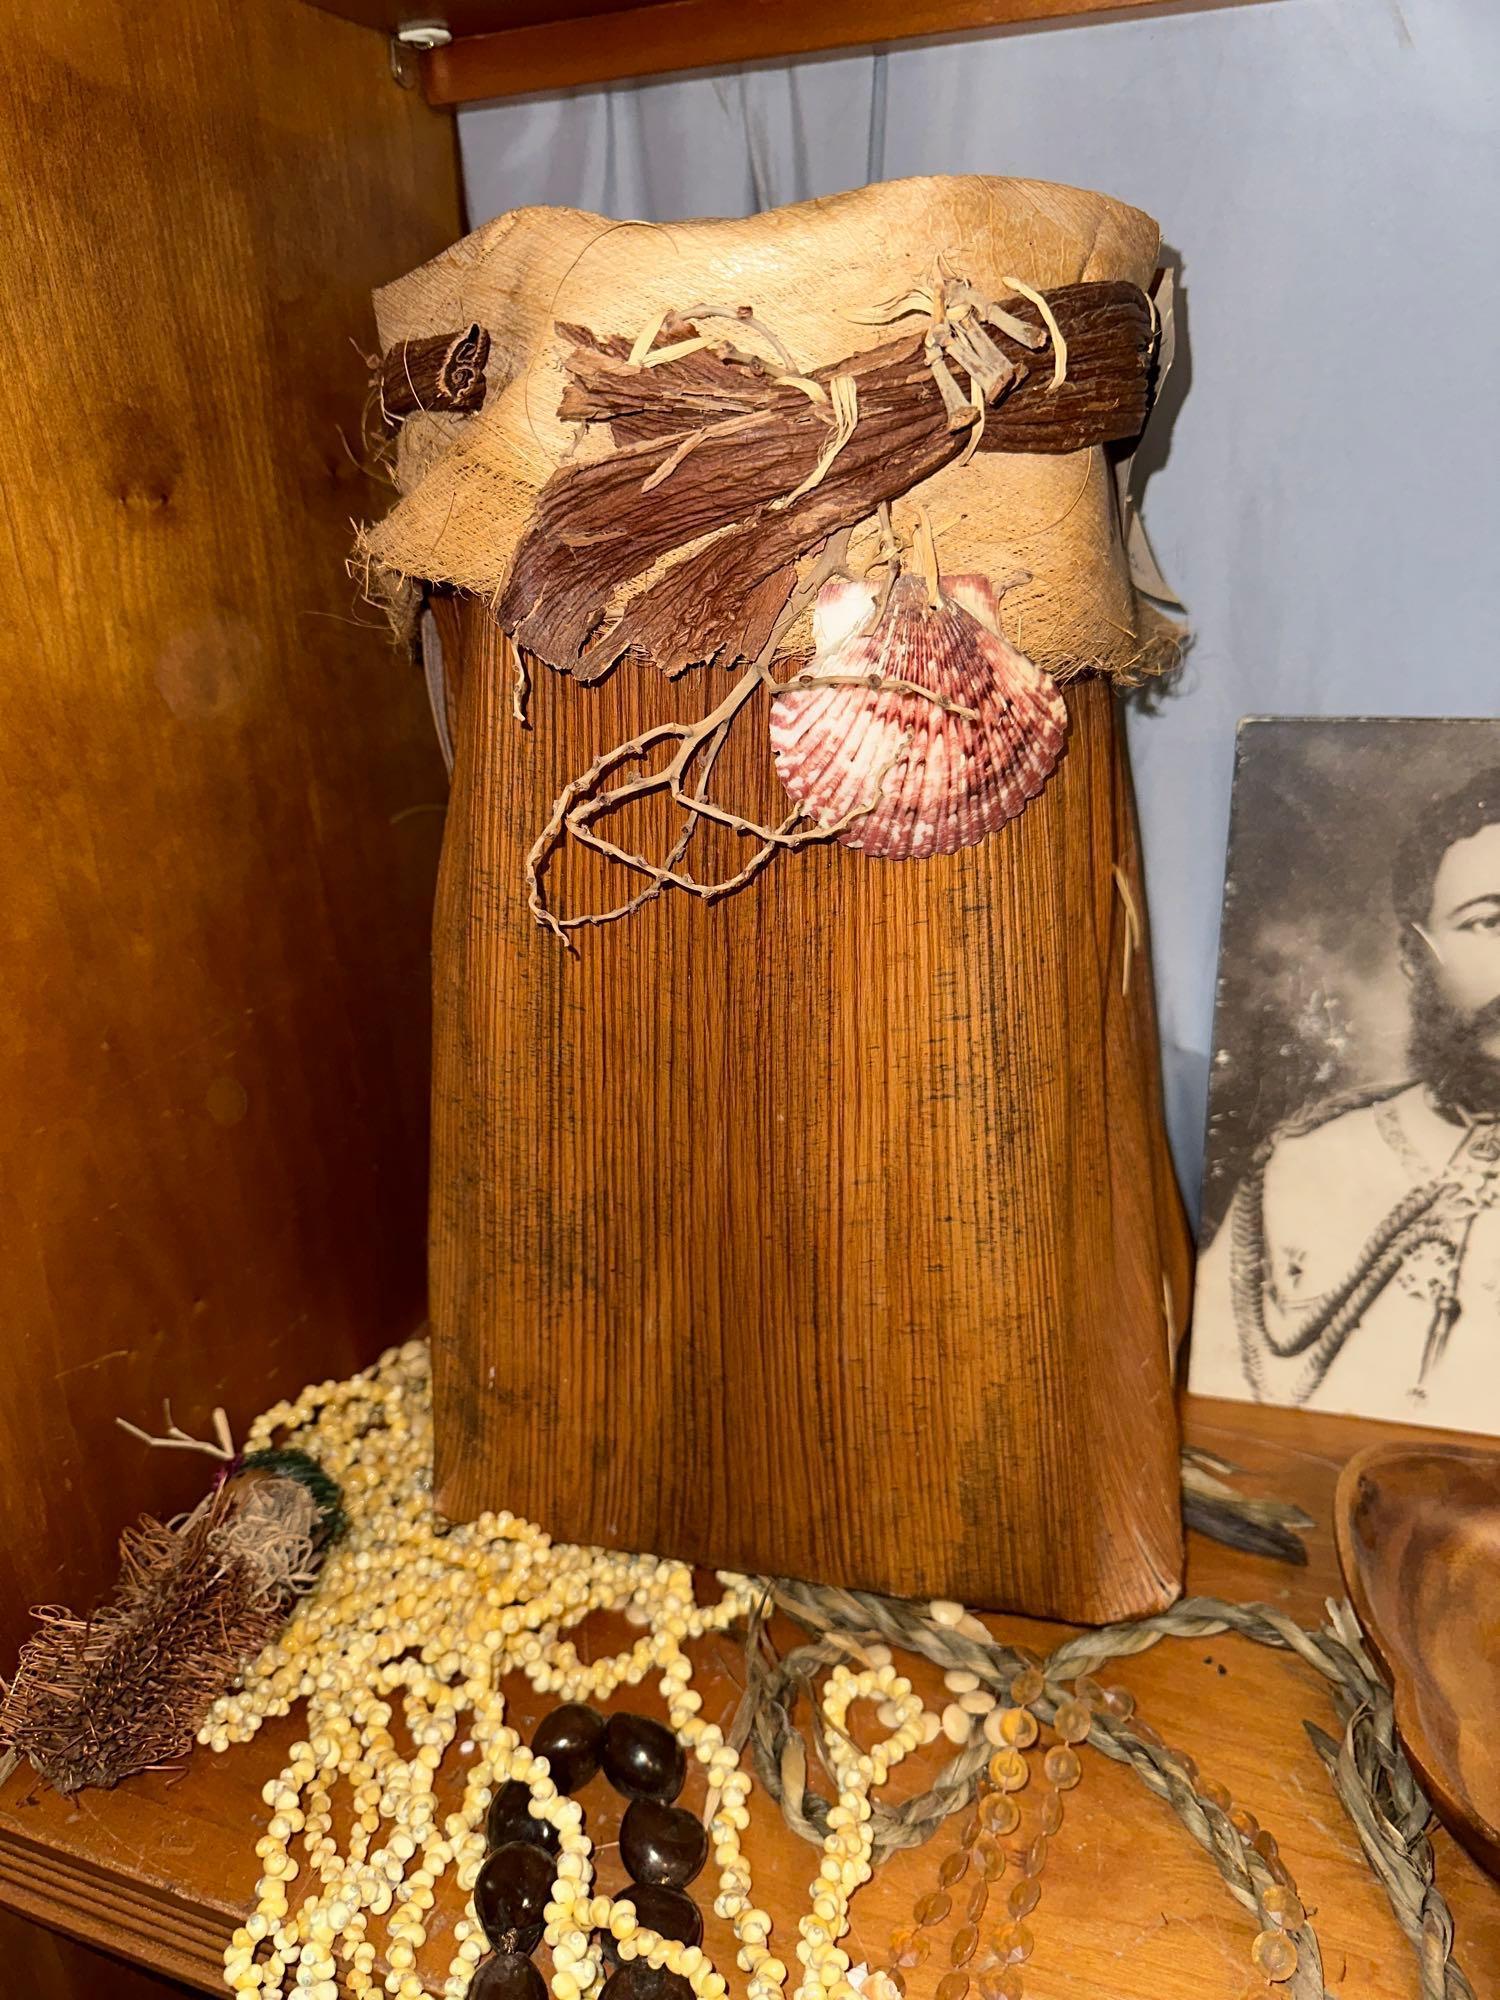 Palm Sheath Basket from Hawaii, Pod Necklaces, Scarce Hawaiian Tapa Cloth Fragments and Photos